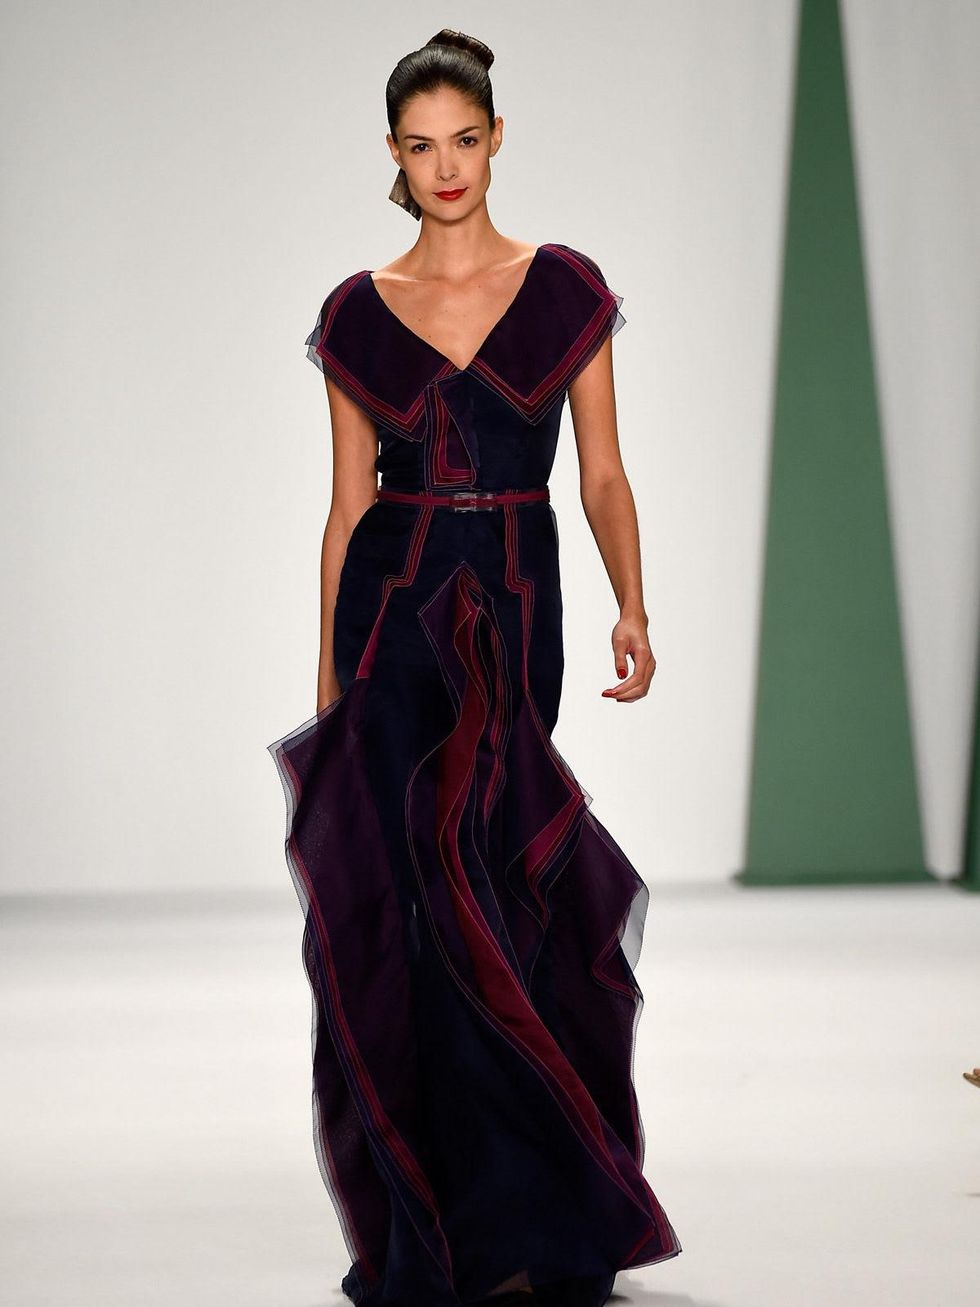 Fashion Week spring 2015 Carolina Herrera purple and red gown